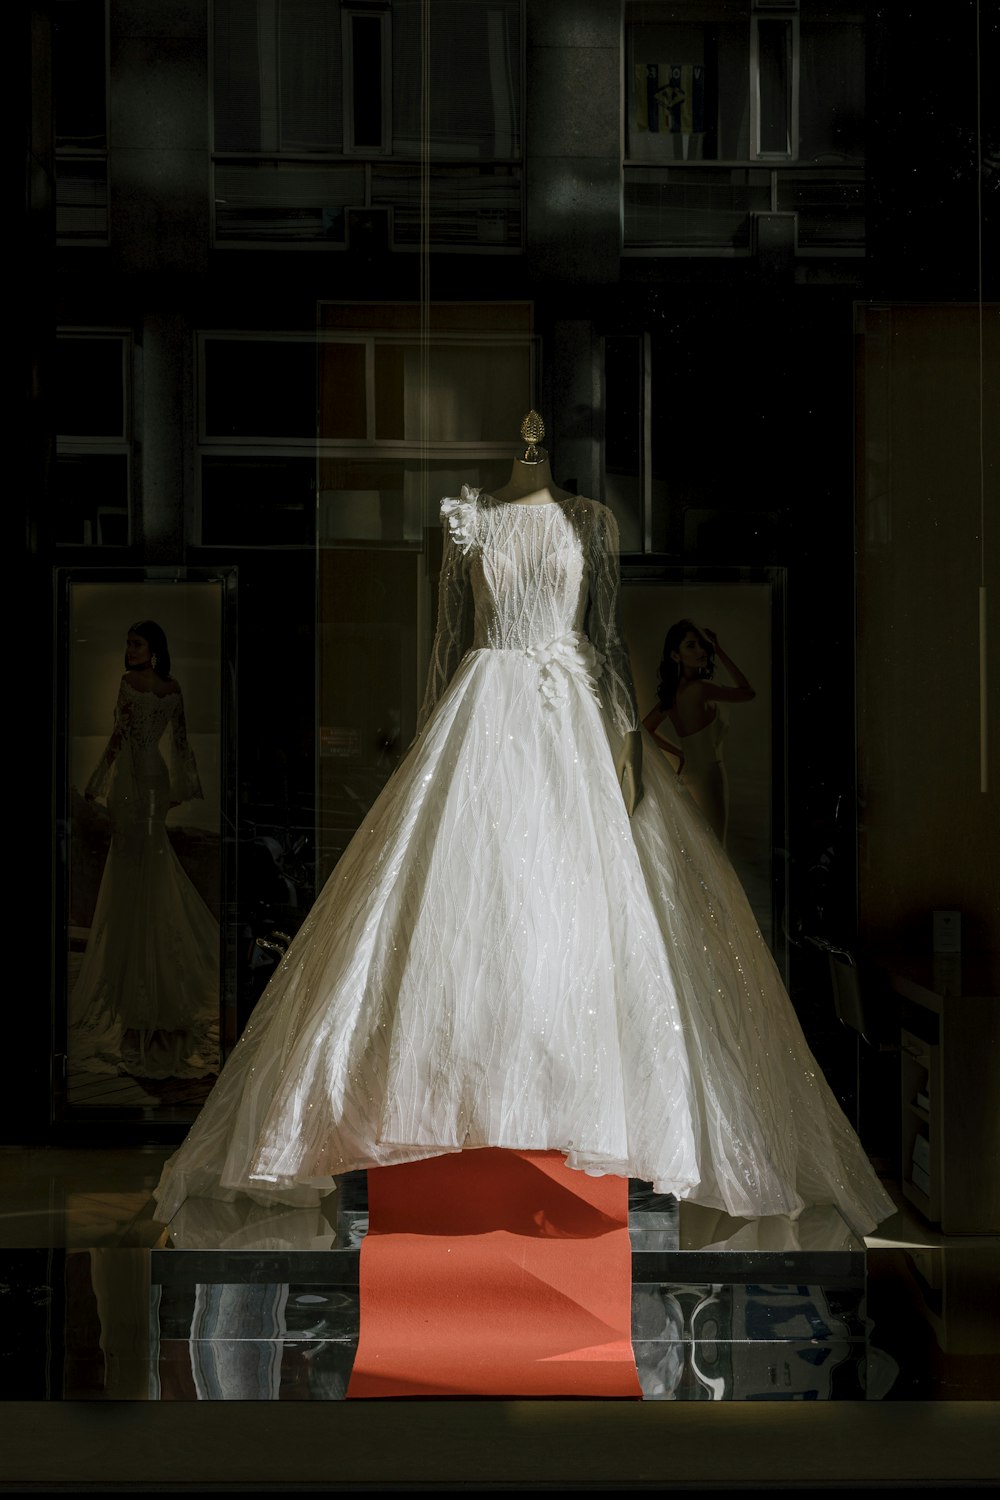 edinburgh wedding dress shop window display